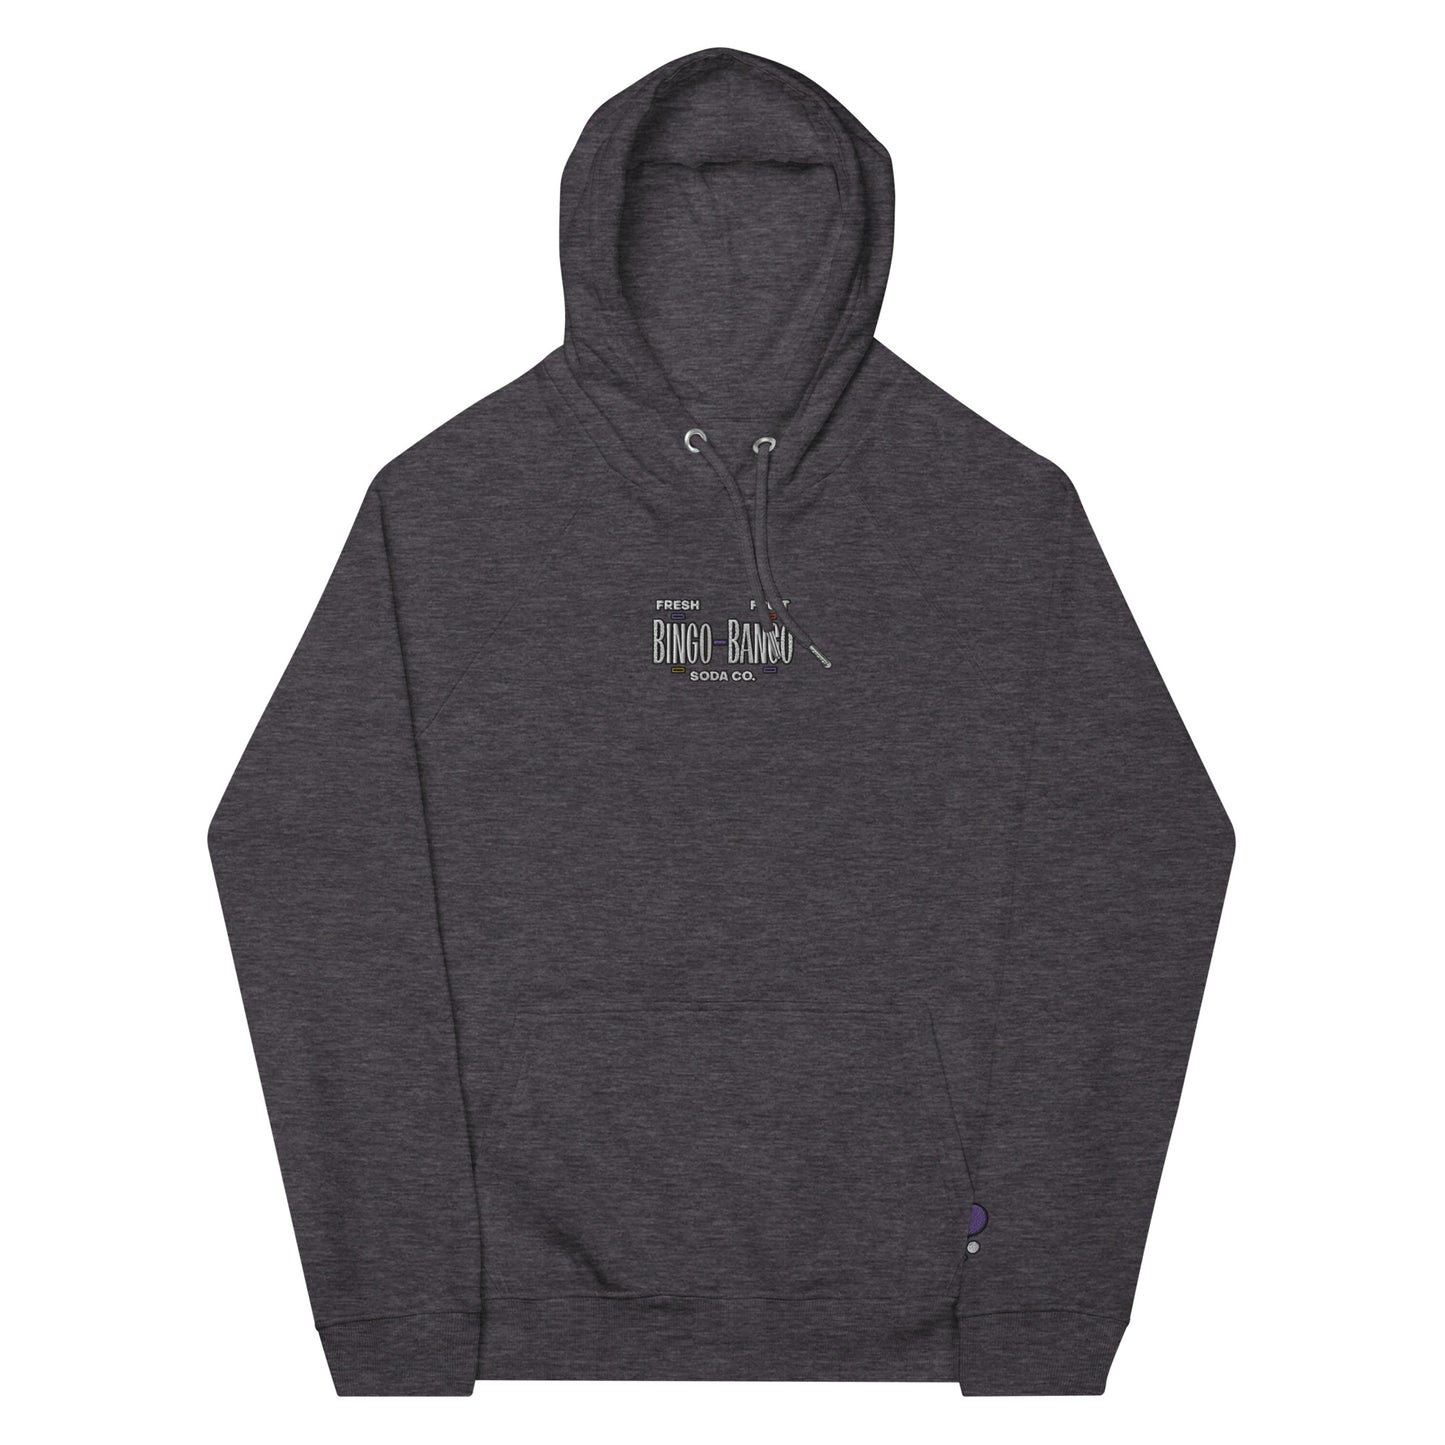 Unisex embroidered hoodie